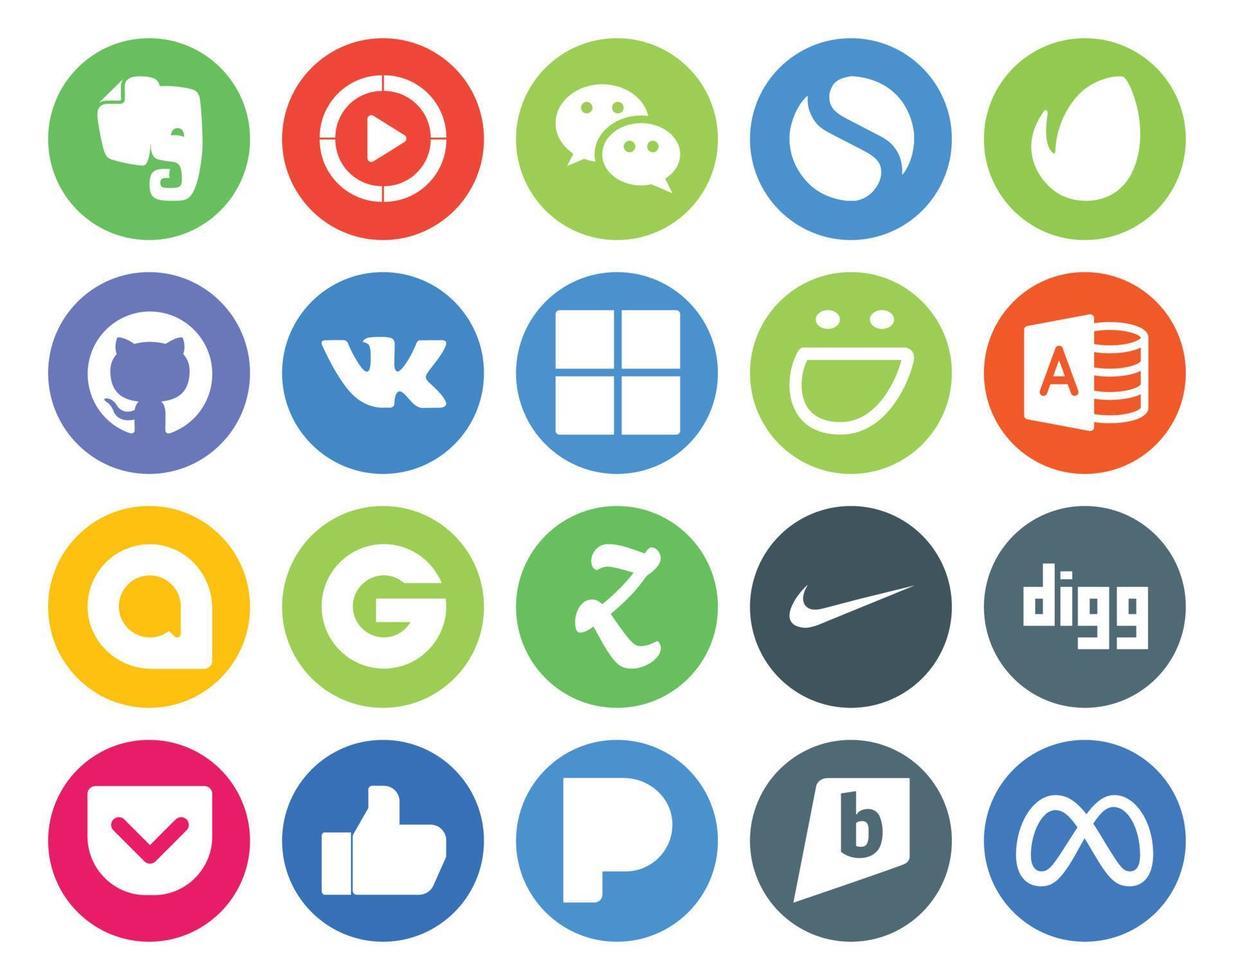 20 Social Media Icon Pack Including pocket nike vk zootool google allo vector